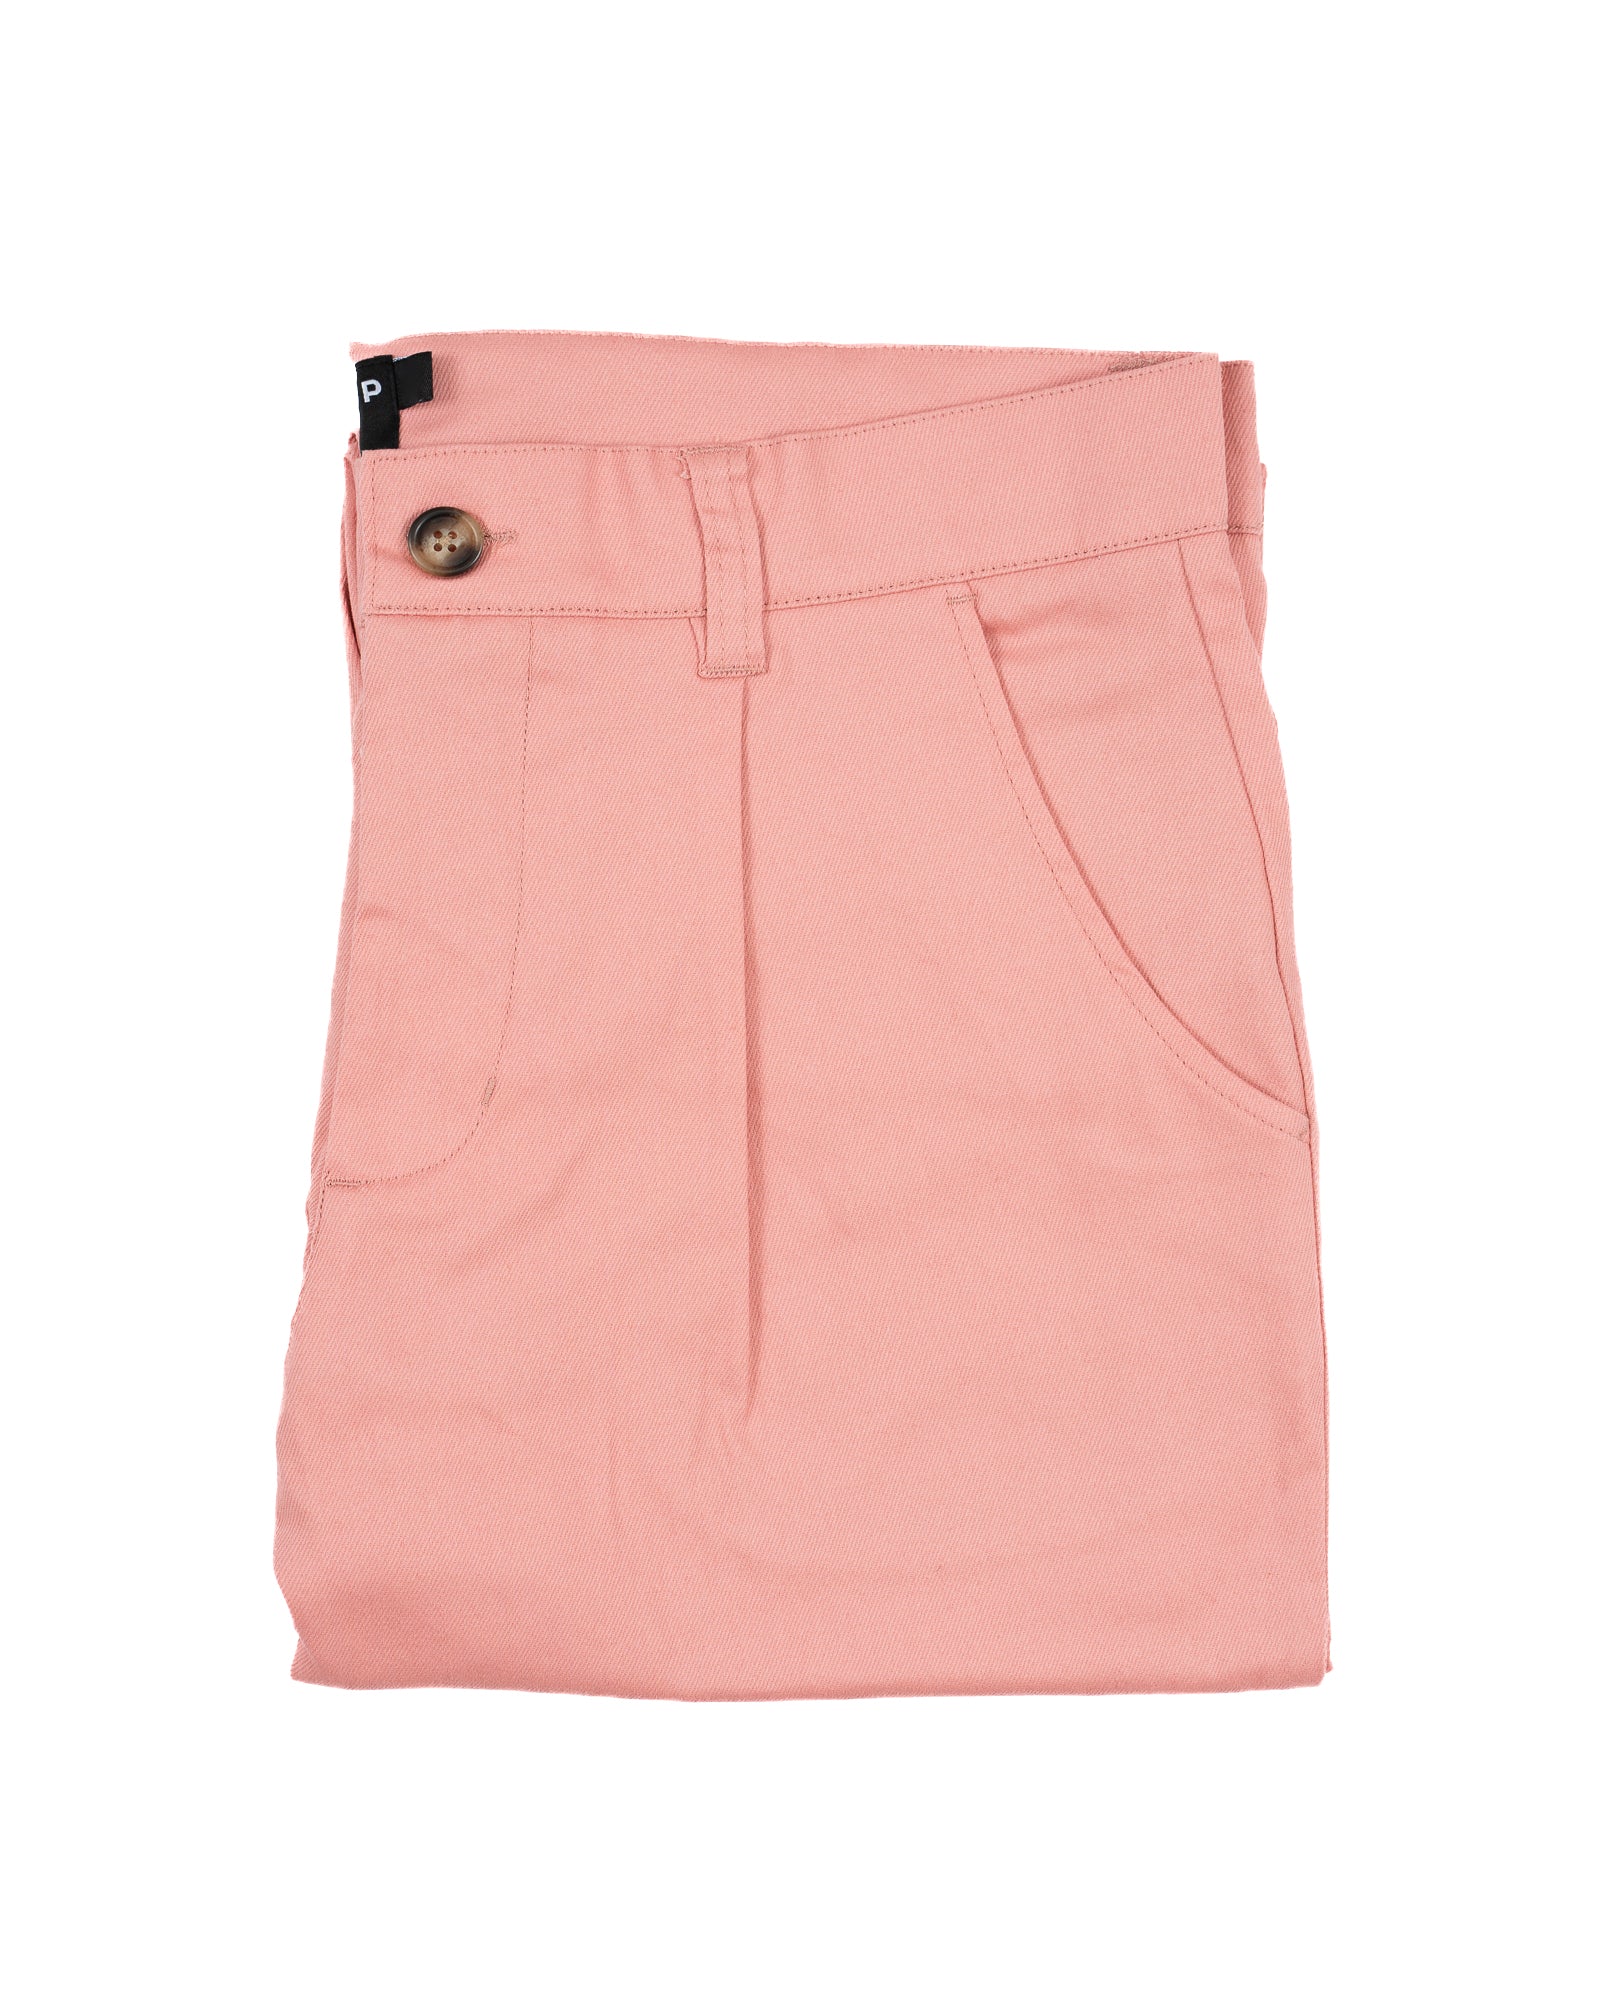 Powder Pink Trouser